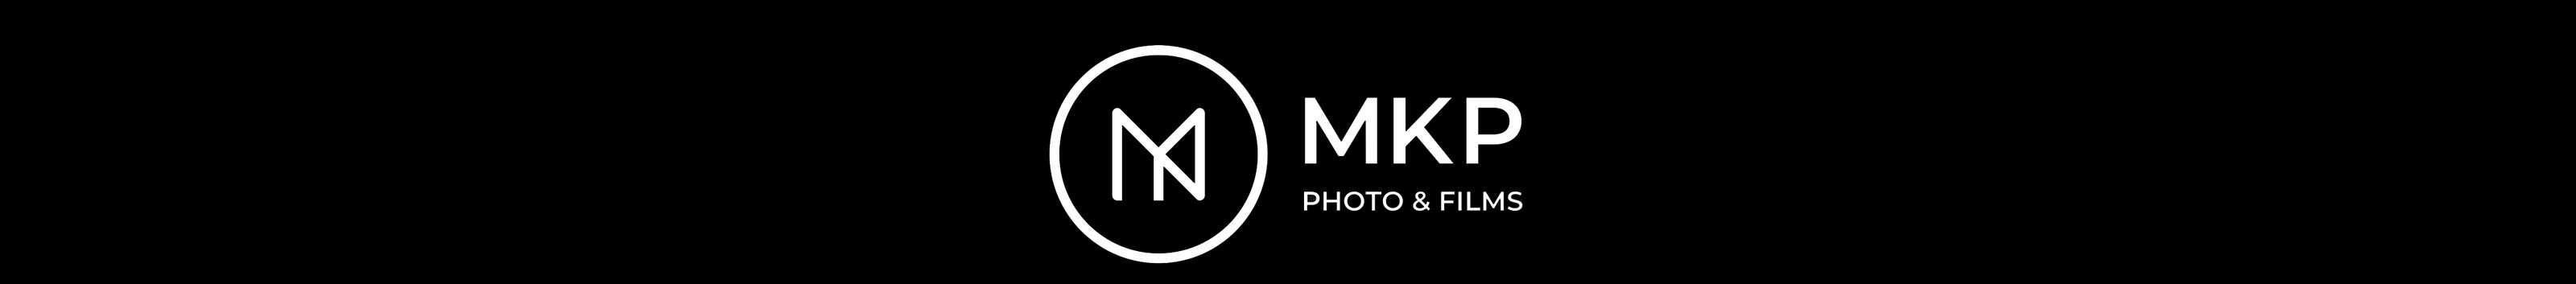 MKP Photo & Films's profile banner